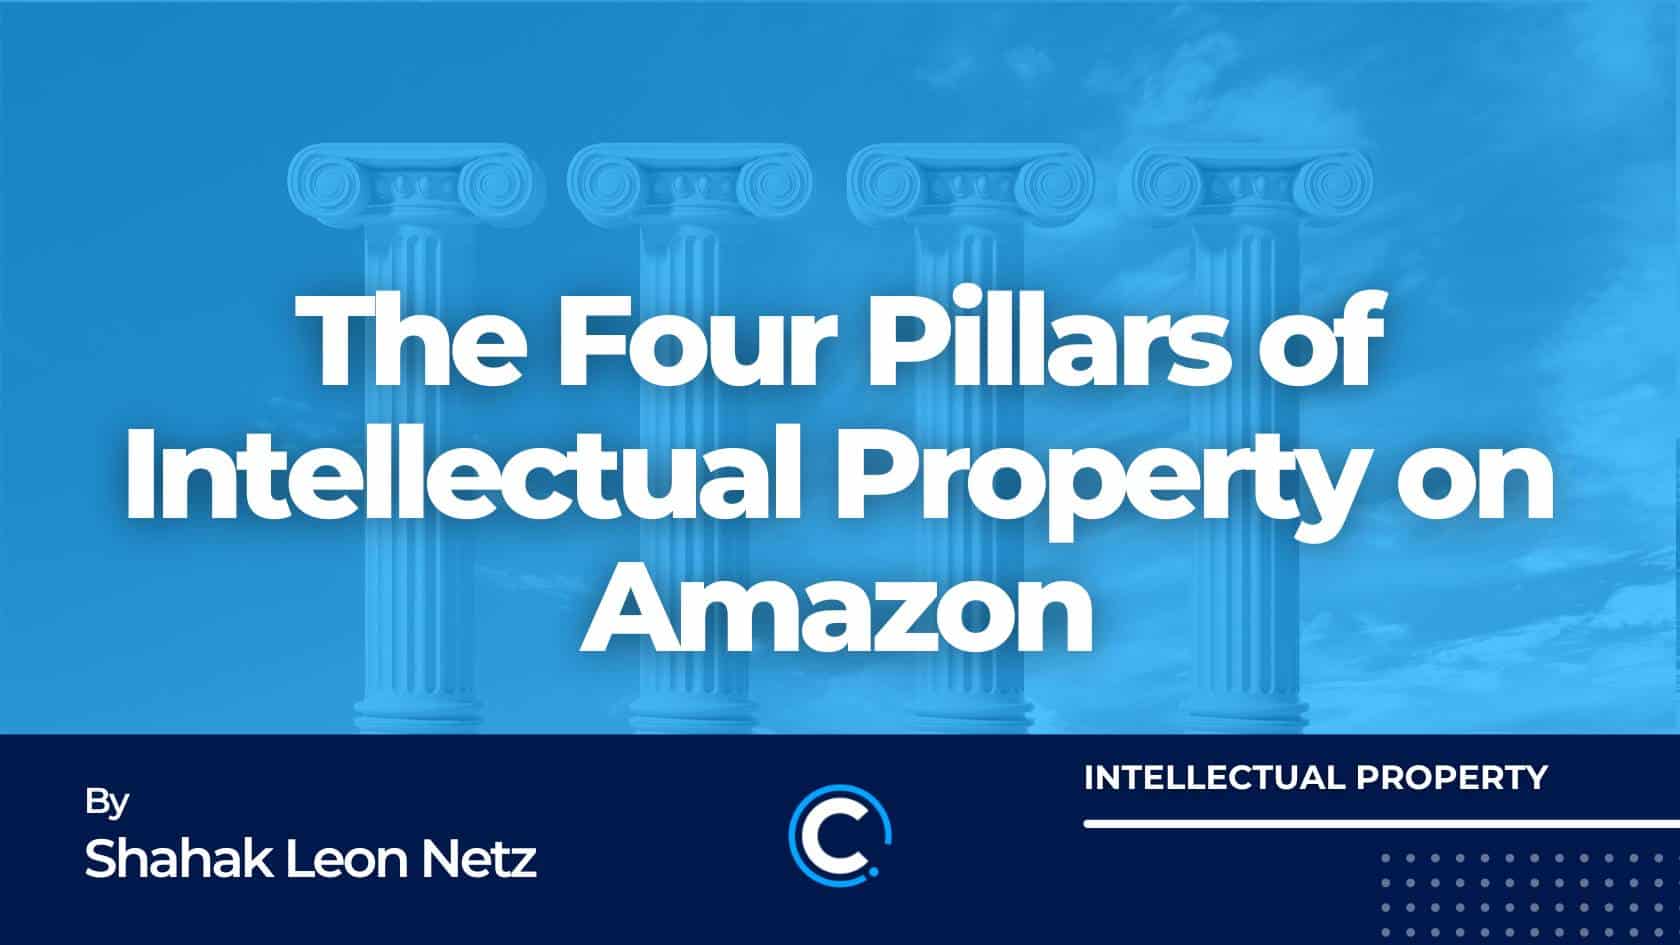 The-Four-Pillars-of-Intellectual-Property-on-Amazon1.jpg